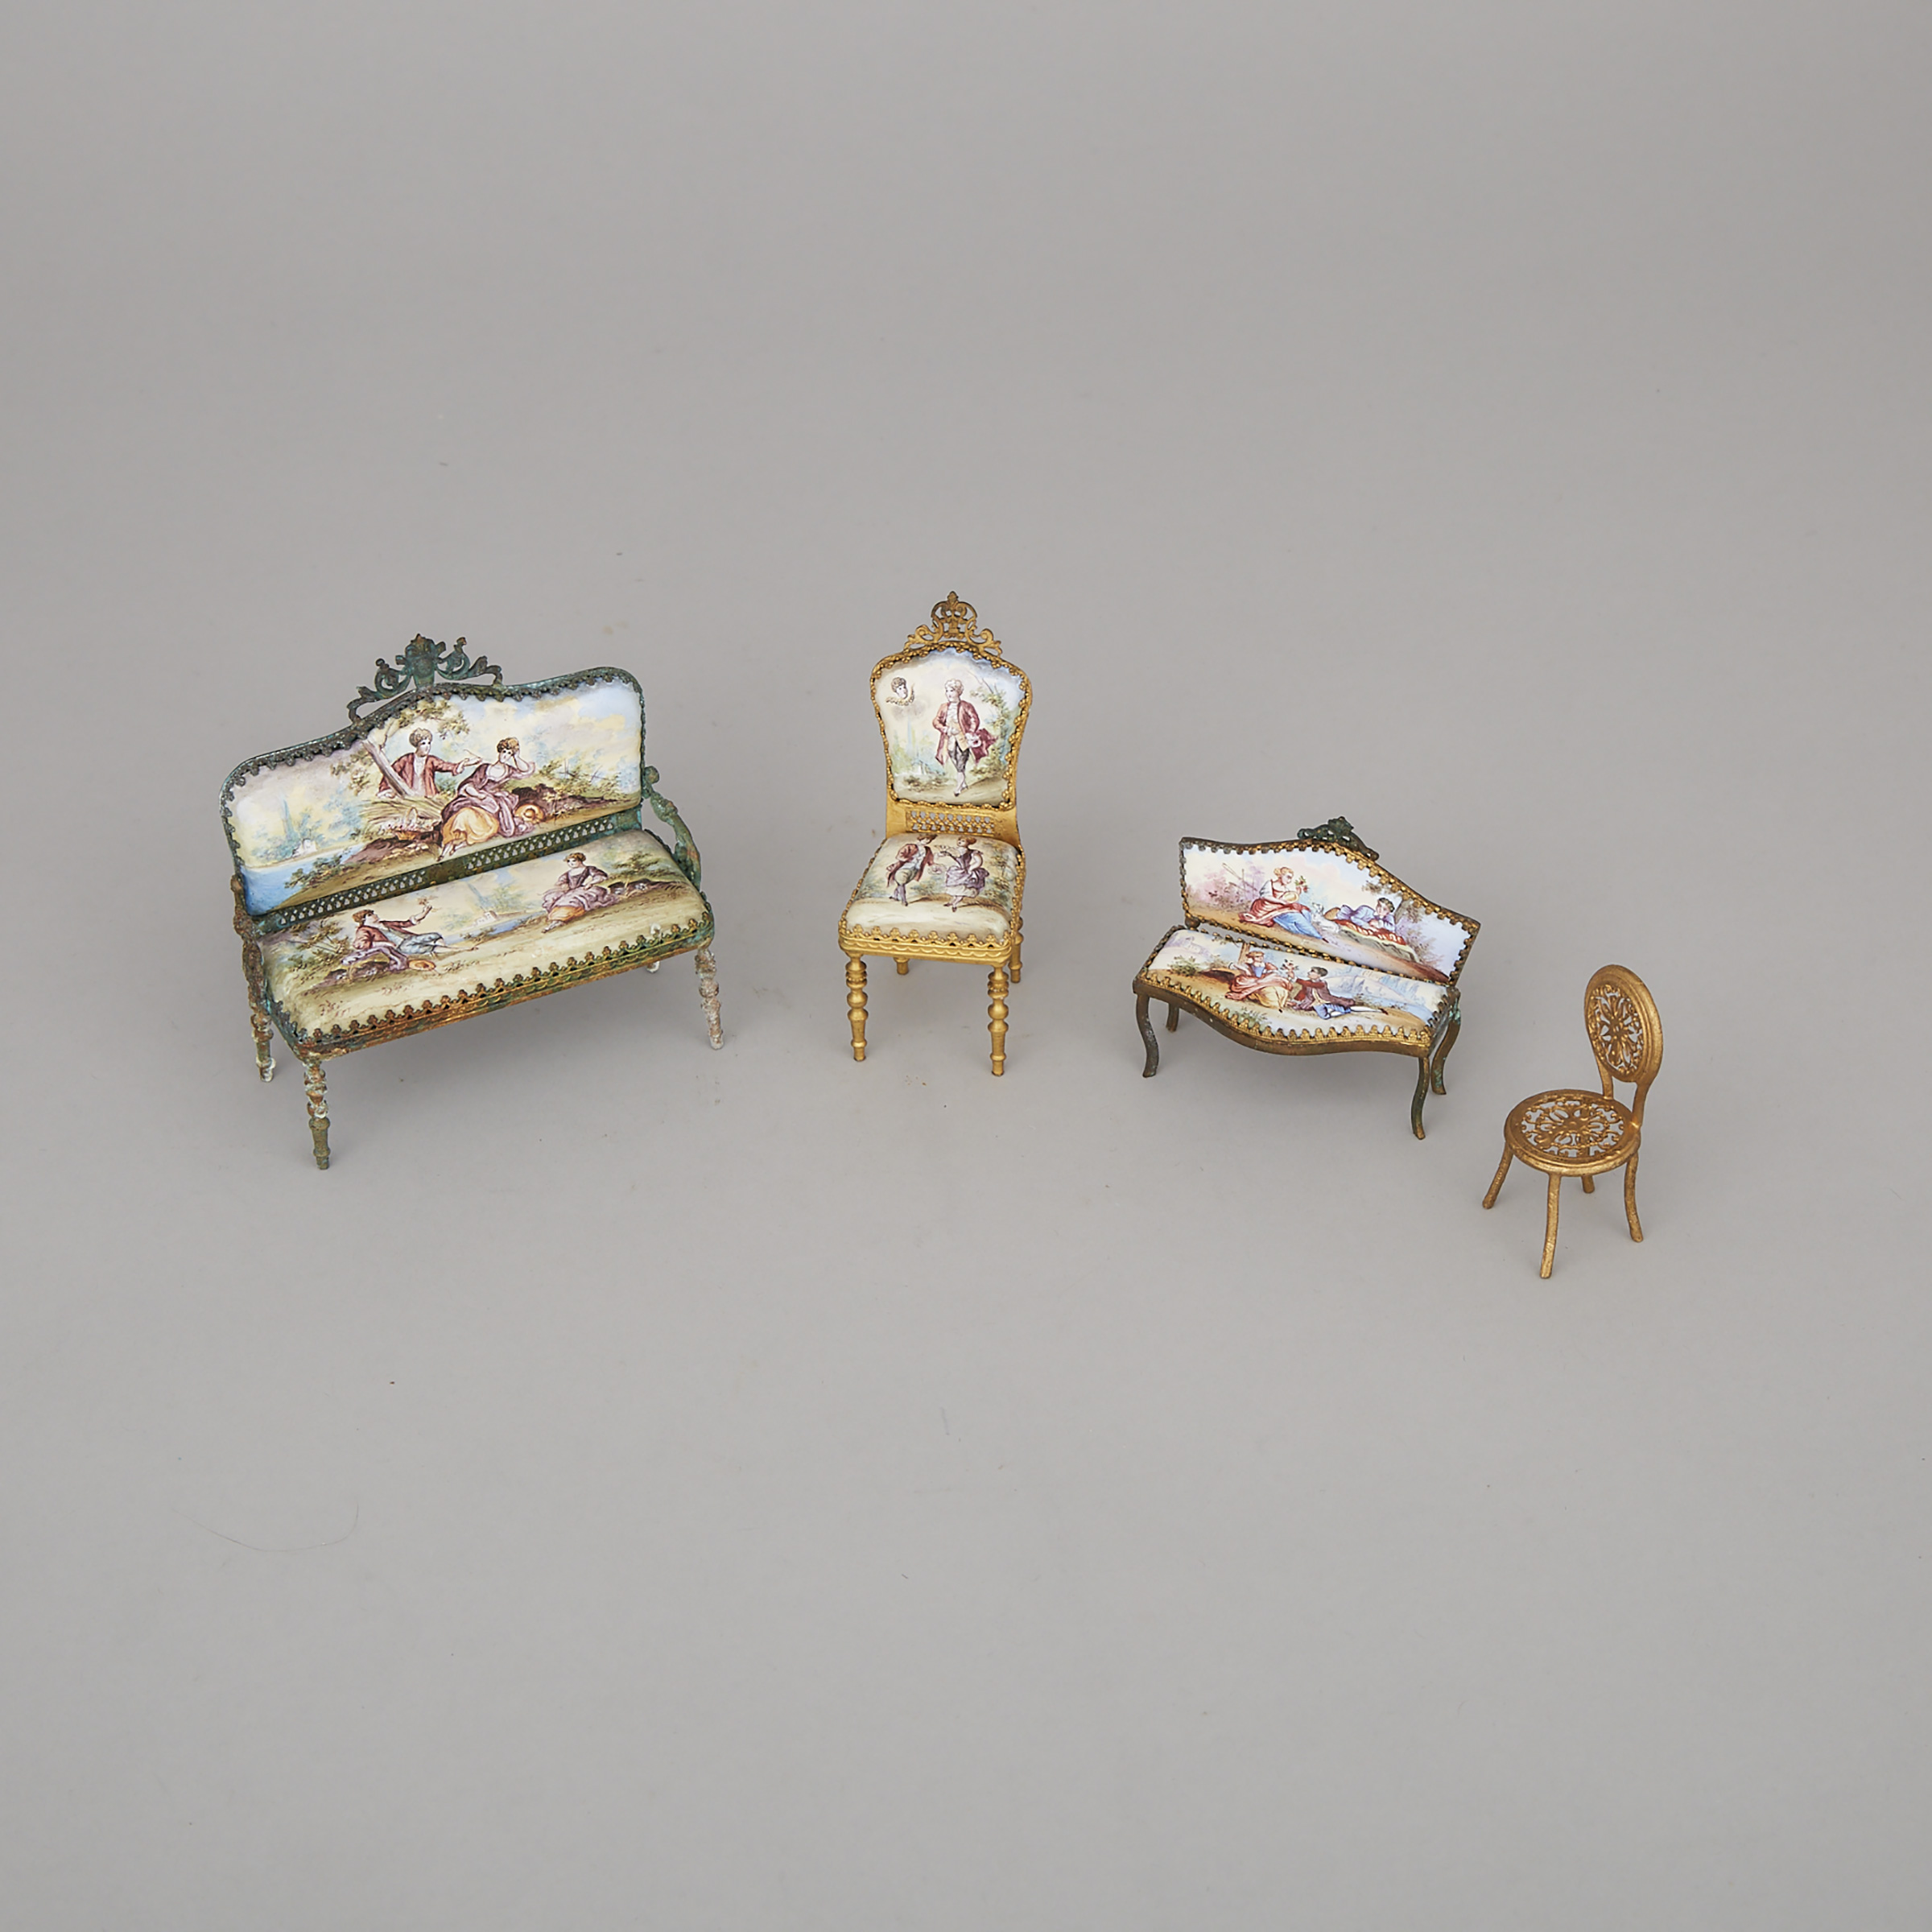 Three Pieces Viennese Enamel Mounted Miniature Oromolu Salon Furniture, early 20th century